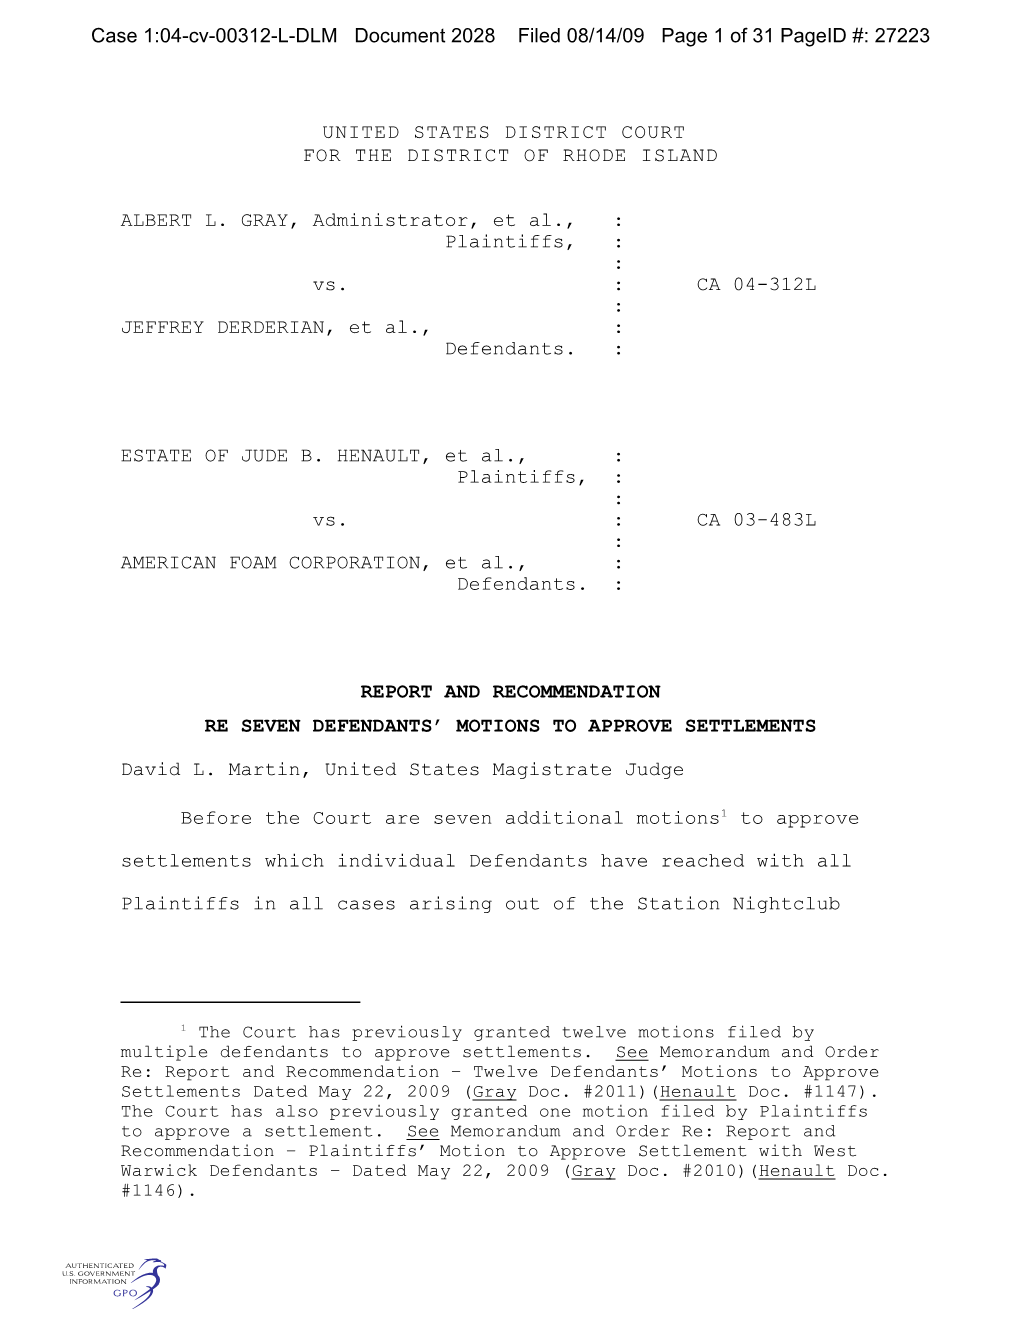 UNITED STATES DISTRICT COURT for the DISTRICT of RHODE ISLAND ALBERT L. GRAY, Administrator, Et Al., : Plaintiffs, :